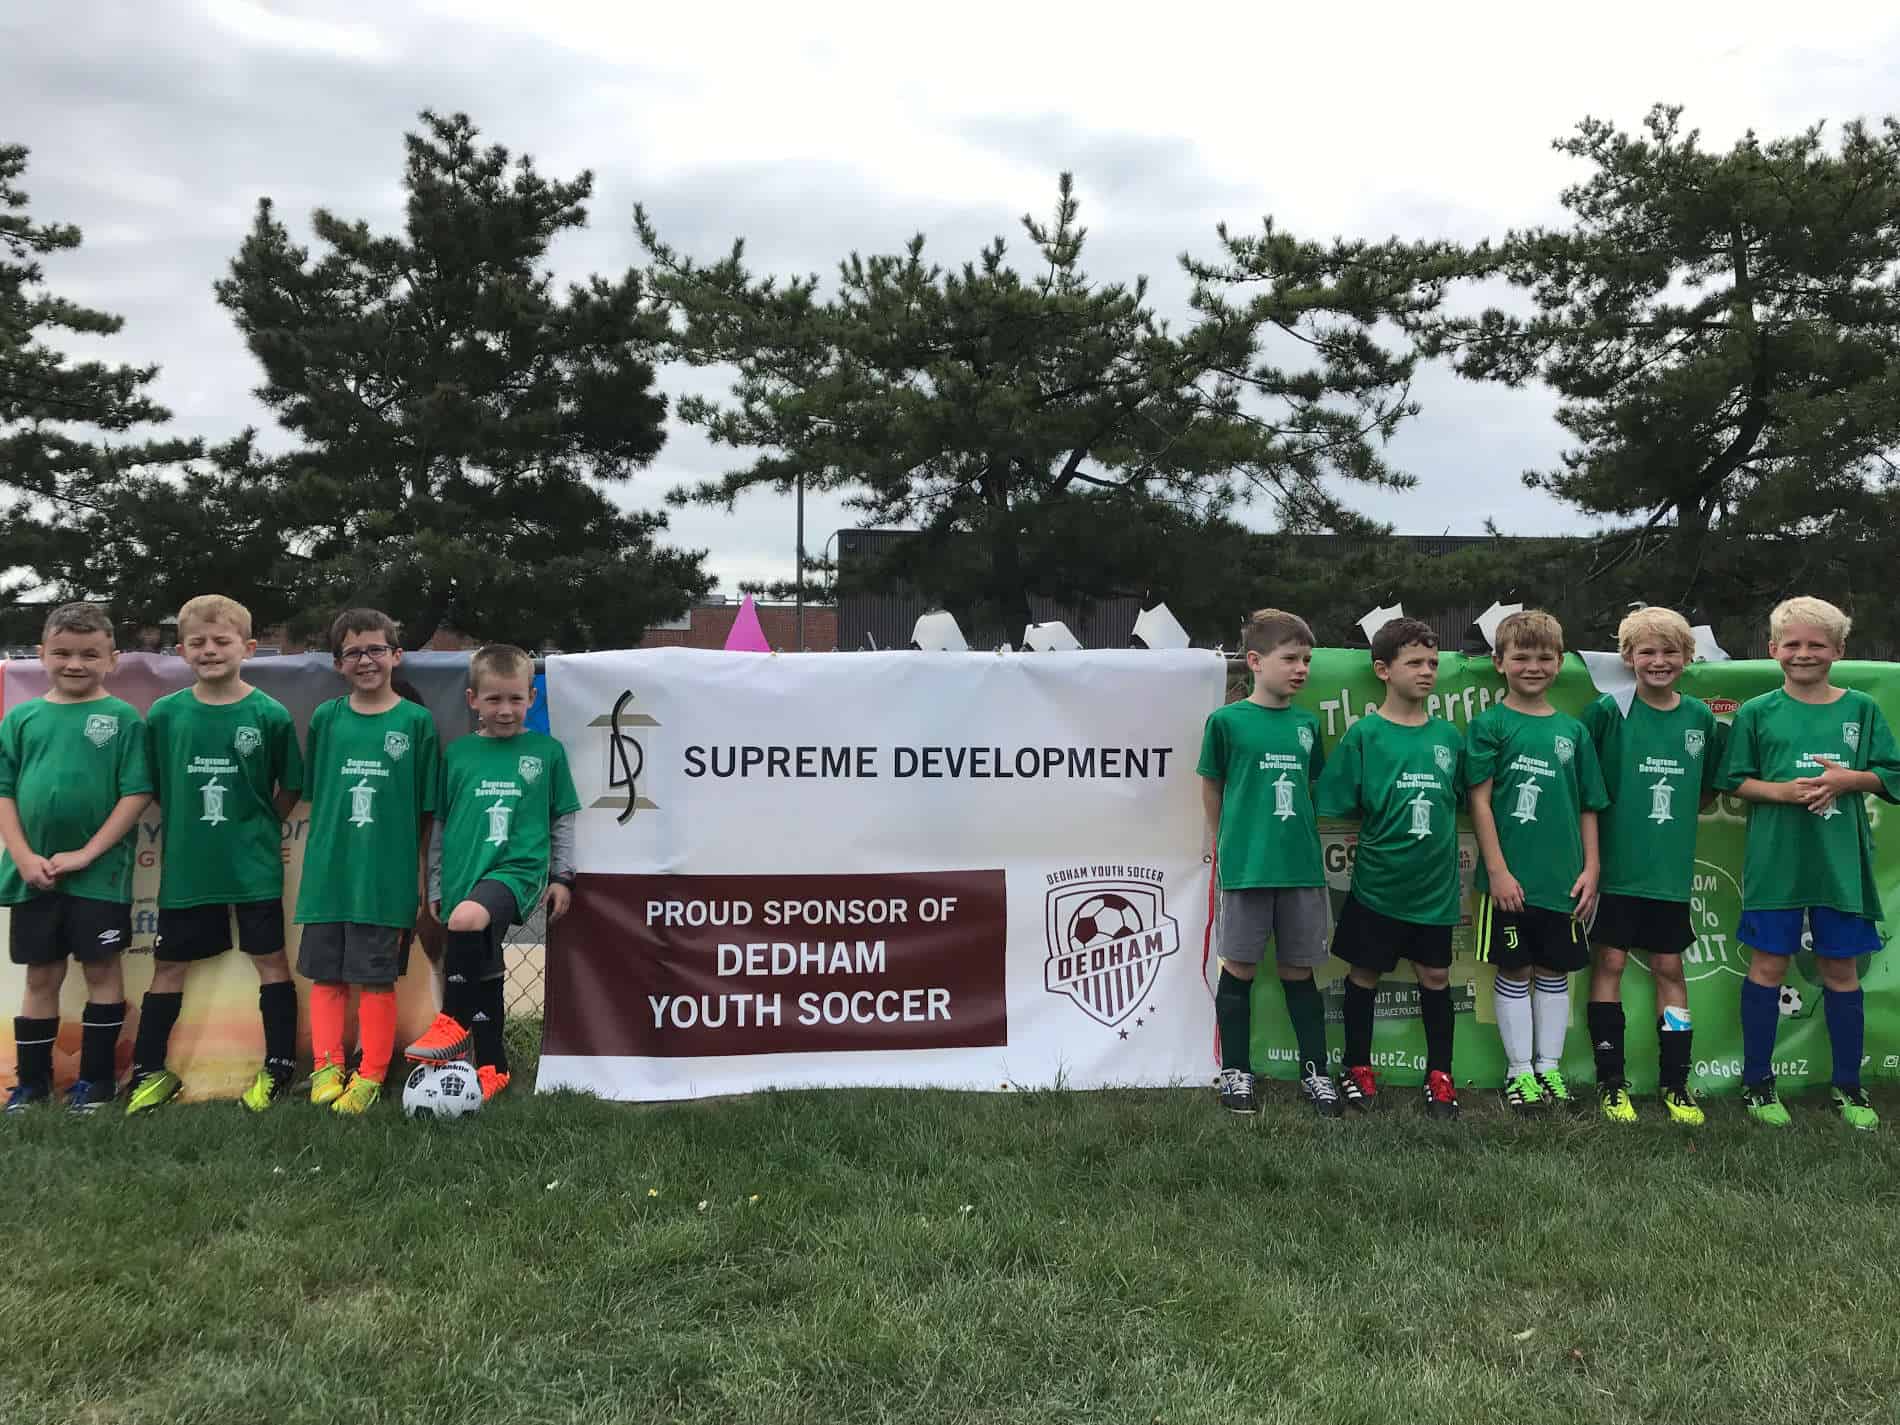 Supreme Development soccer team